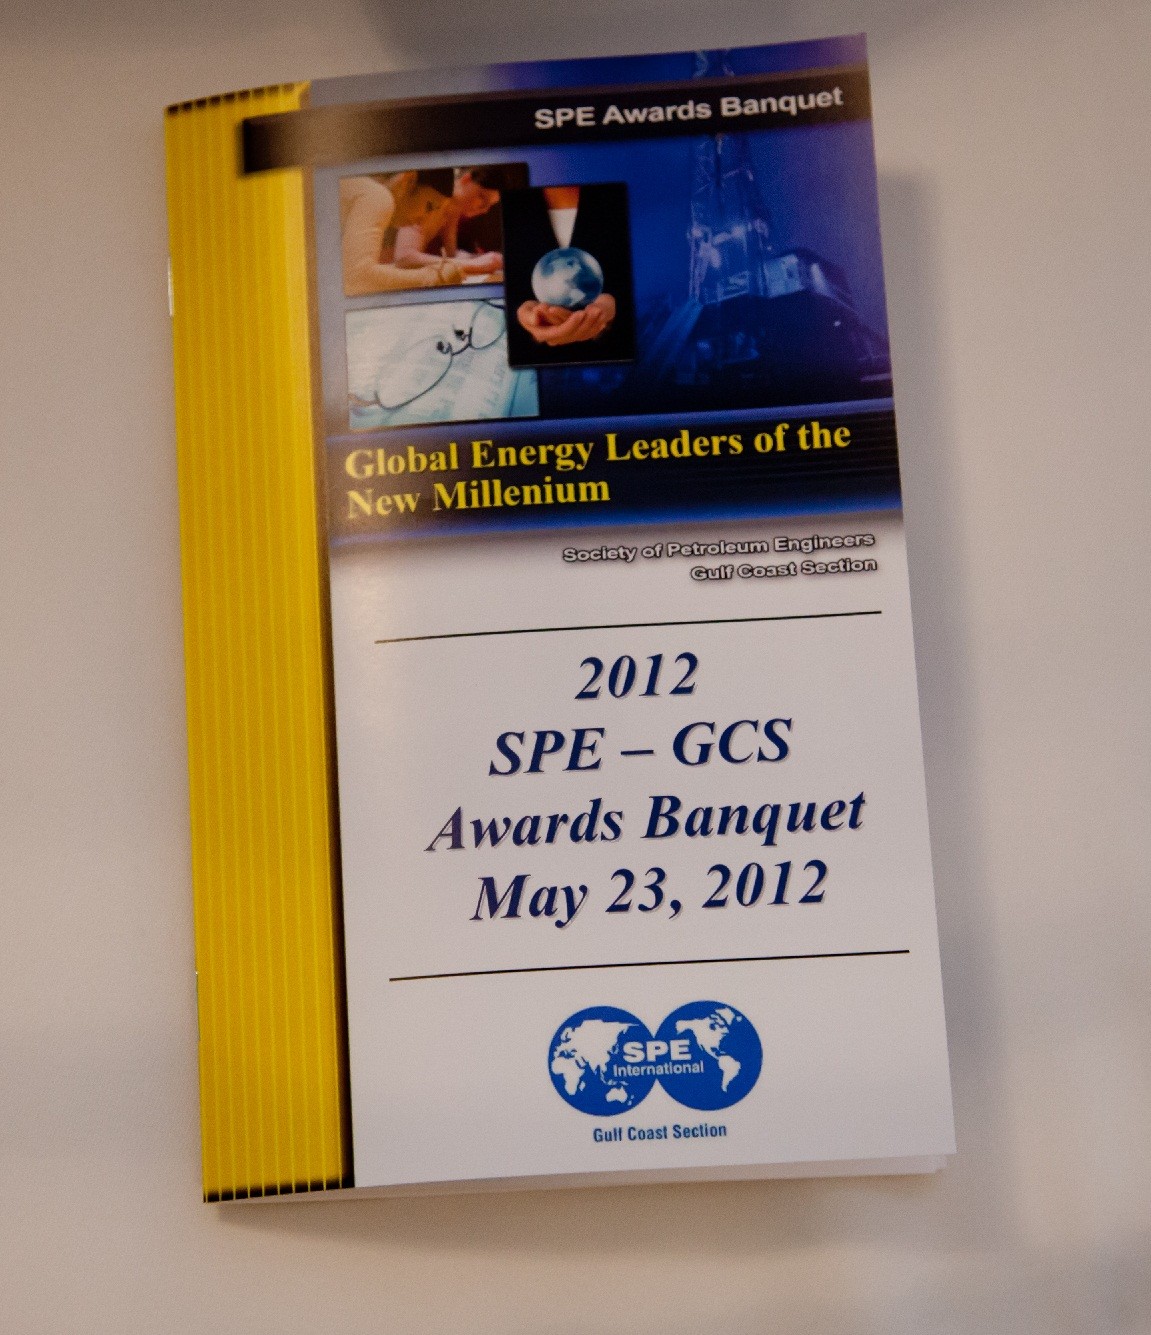 SPEGCS 2012 Awards Banquet Program